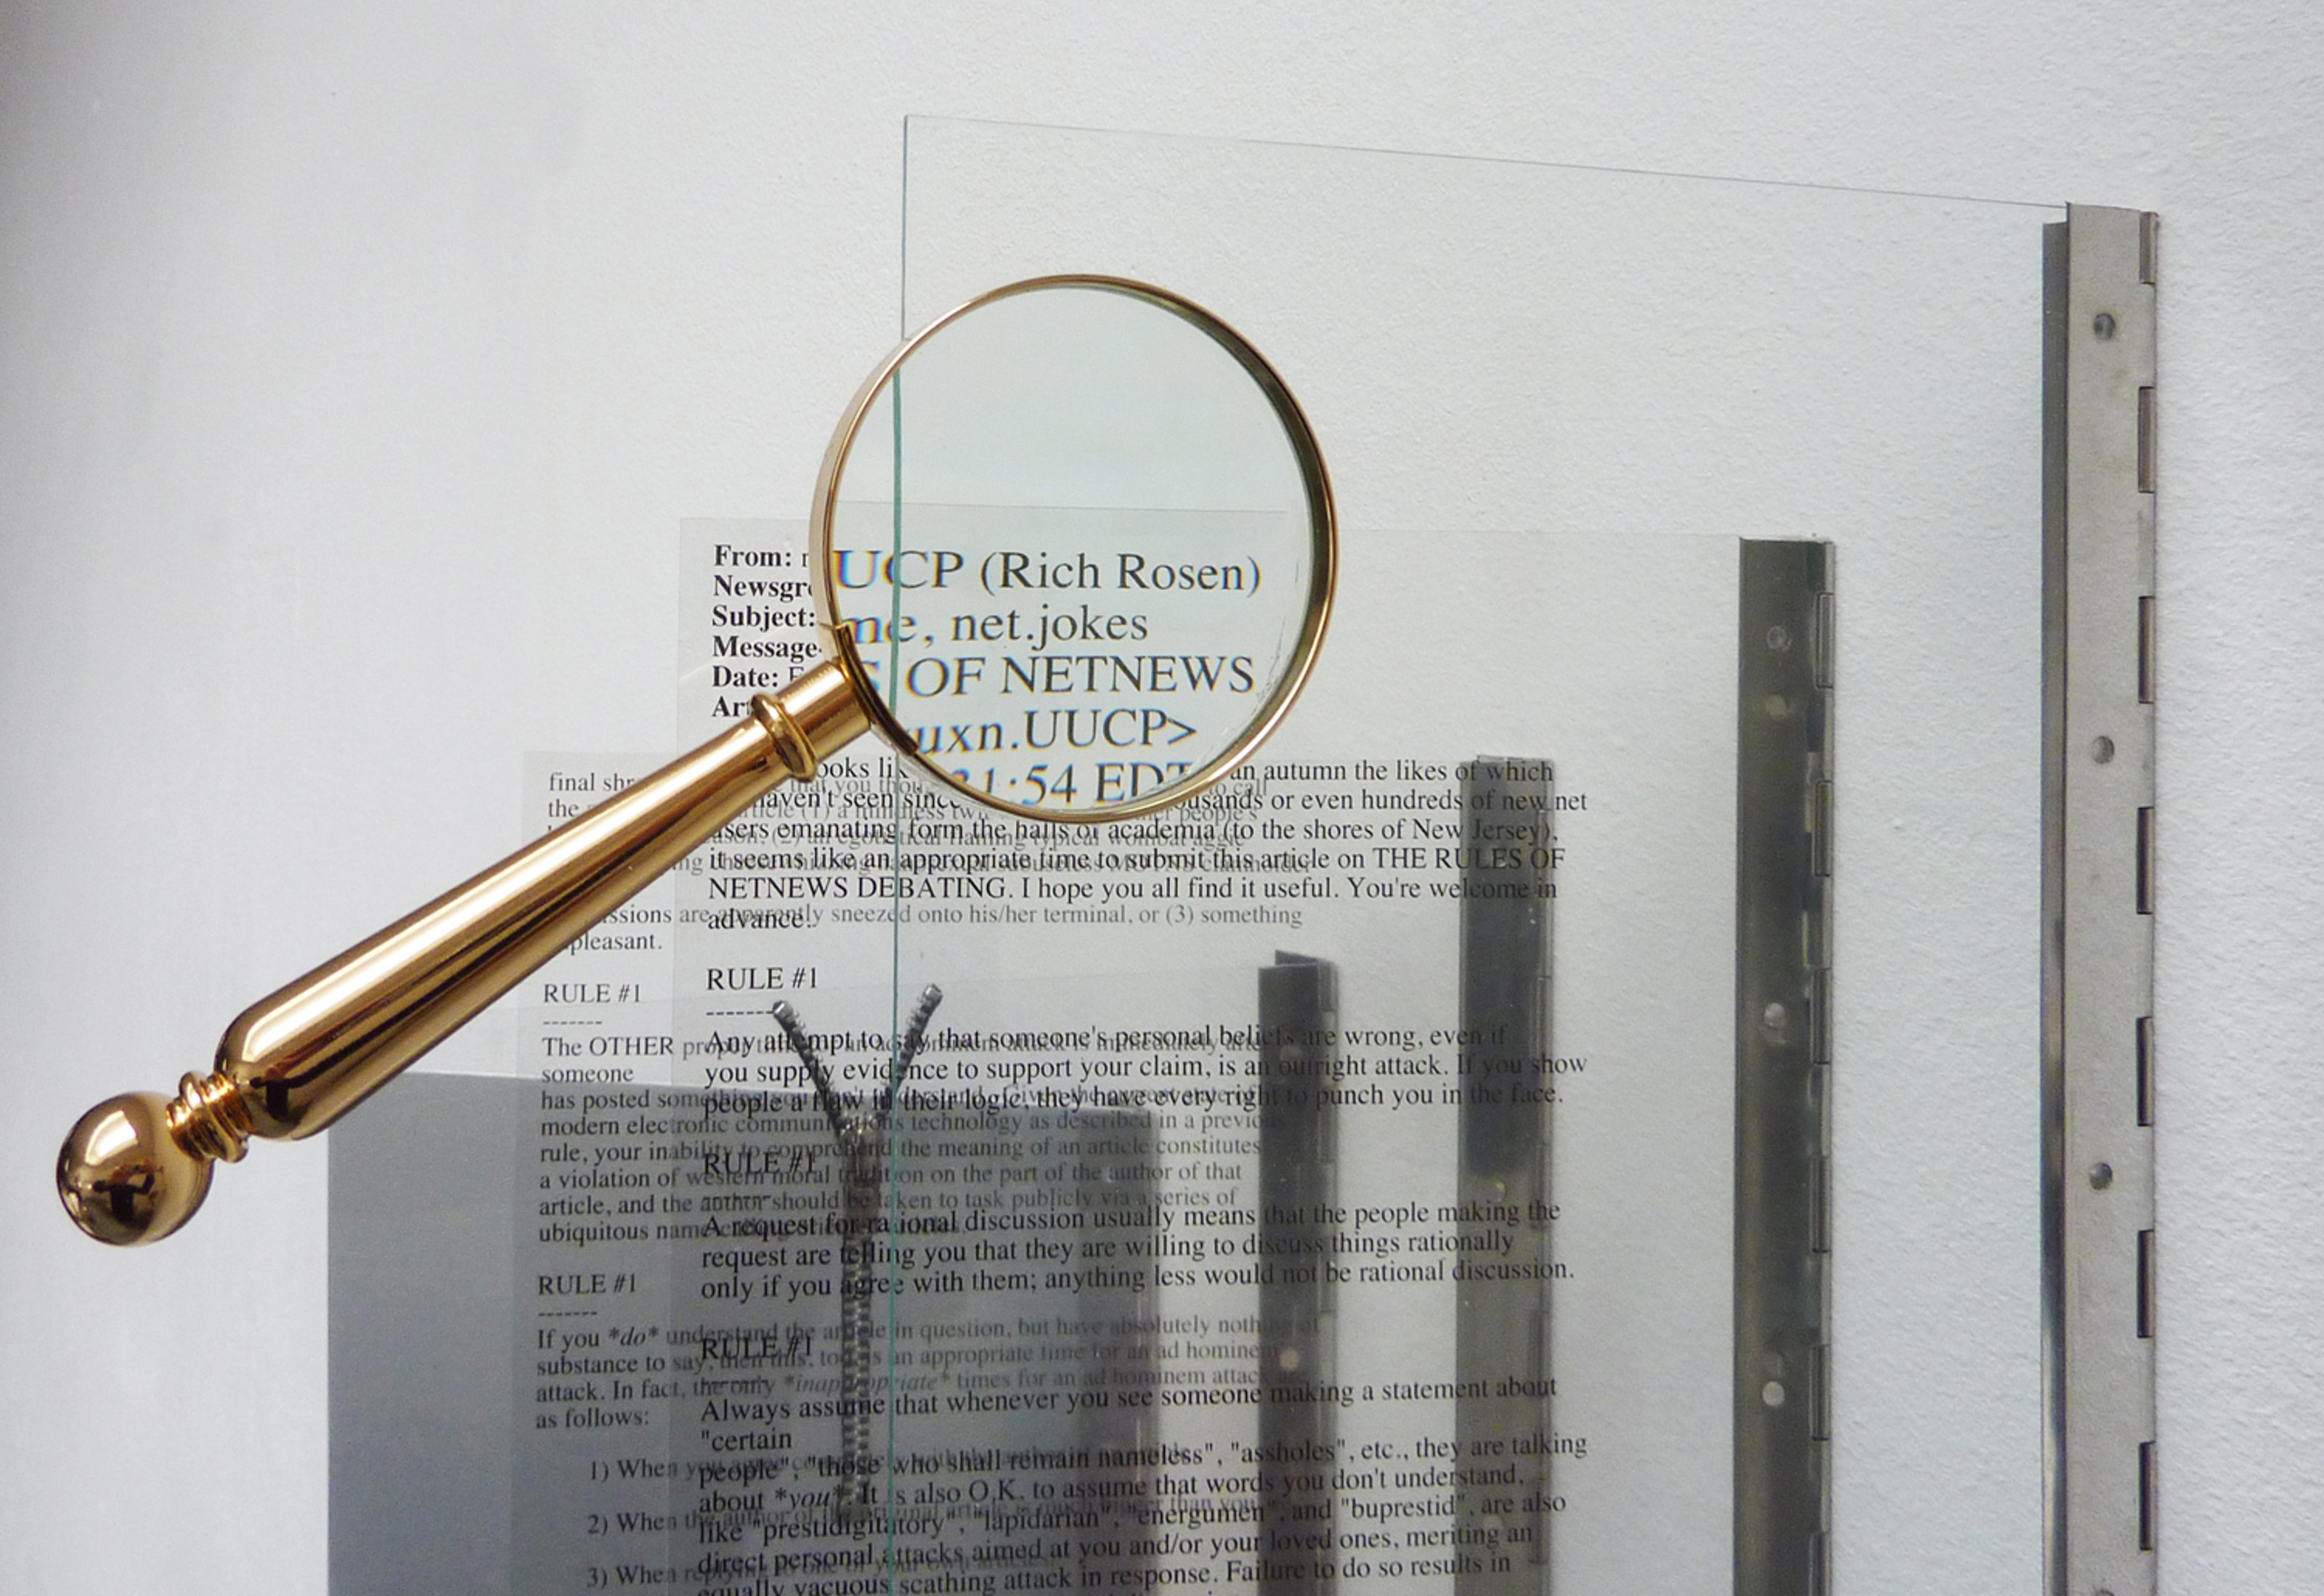 David Jablonowski's artwork, Rules of Netnews Debating (Rich Rosen, 1984), 2011. A magnifier over Rosen's text printed on glass